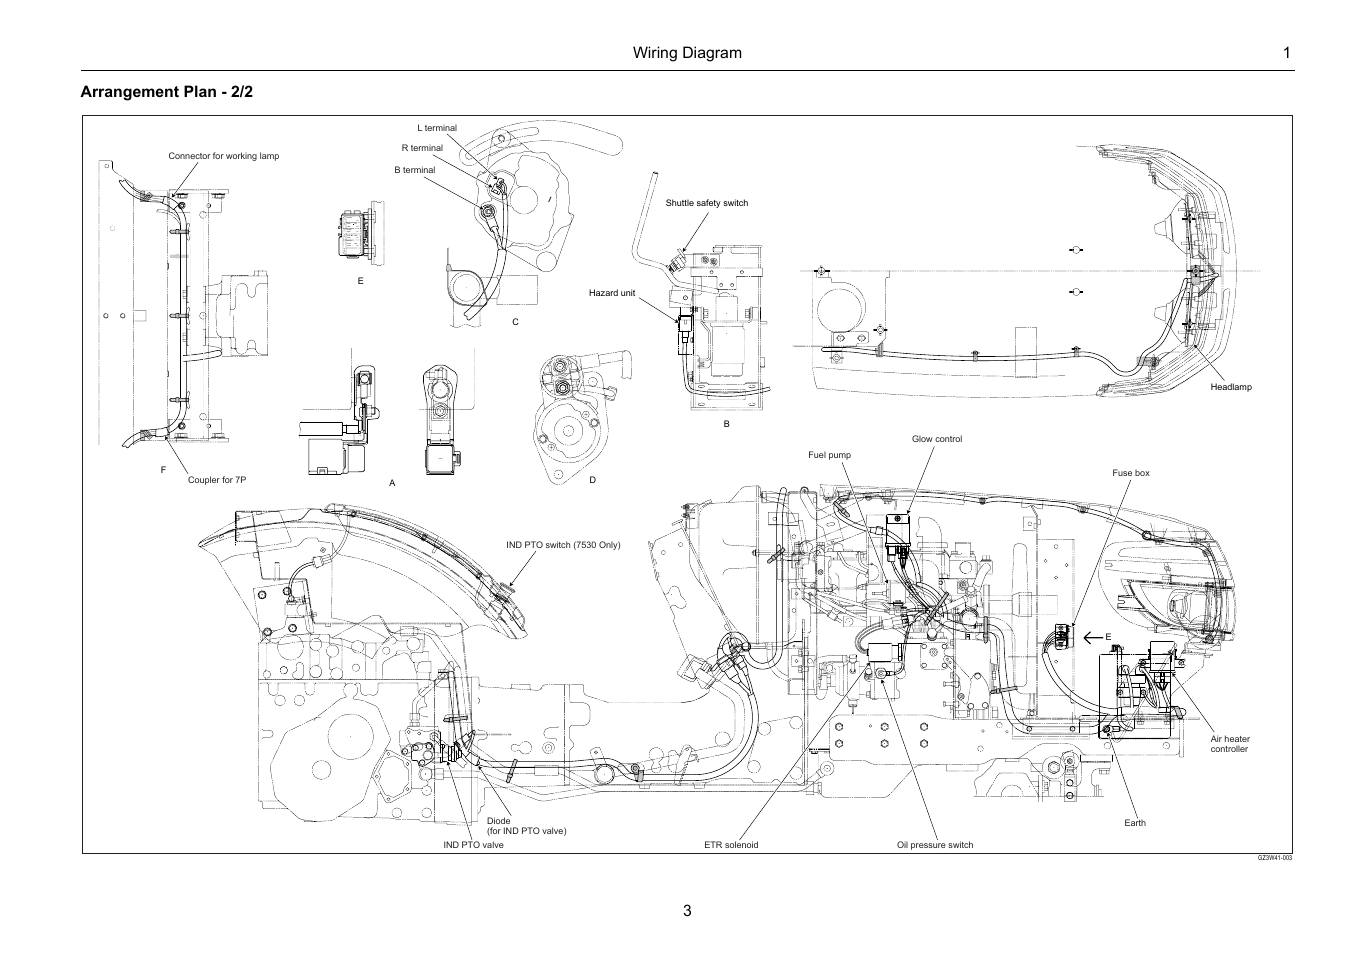 Wiring diagram 1 3 arrangement plan - 2/2 | Cub Cadet 7532 User Manual | Page 215 / 232